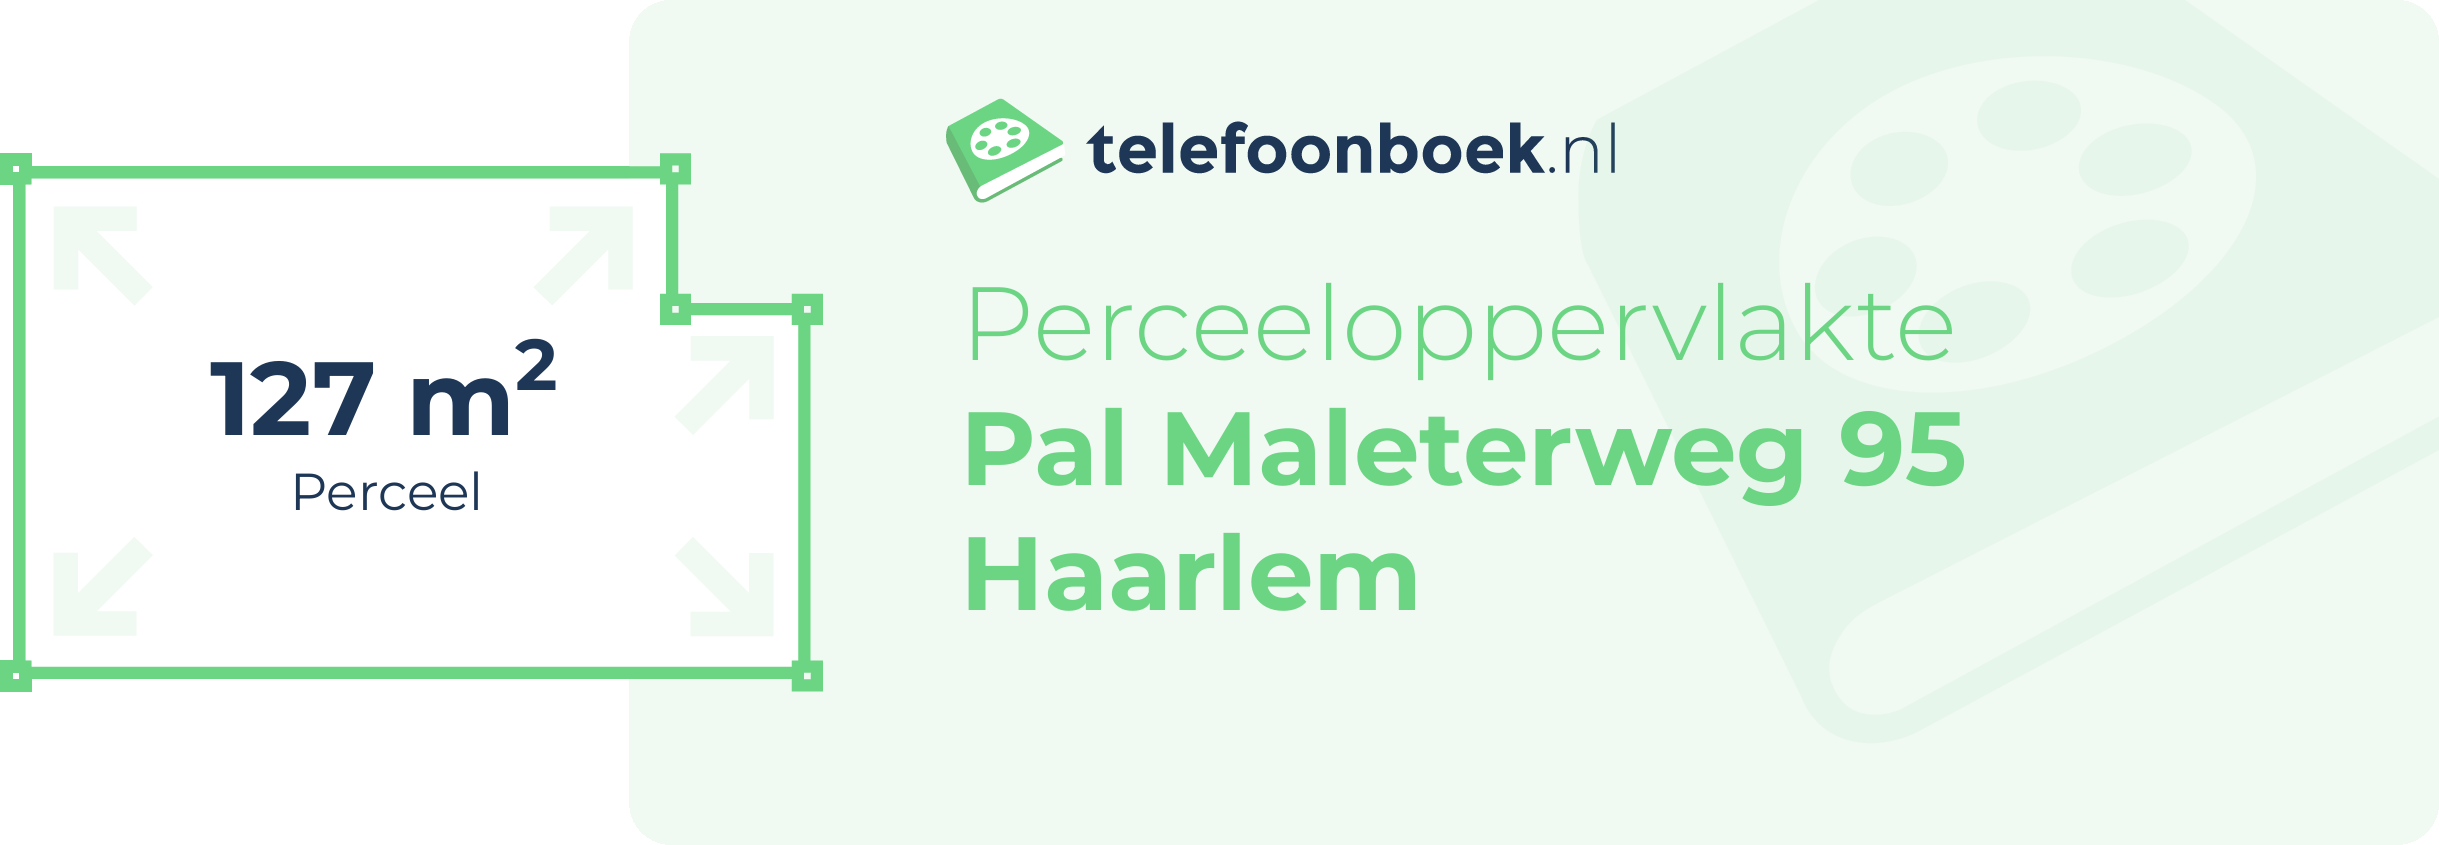 Perceeloppervlakte Pal Maleterweg 95 Haarlem